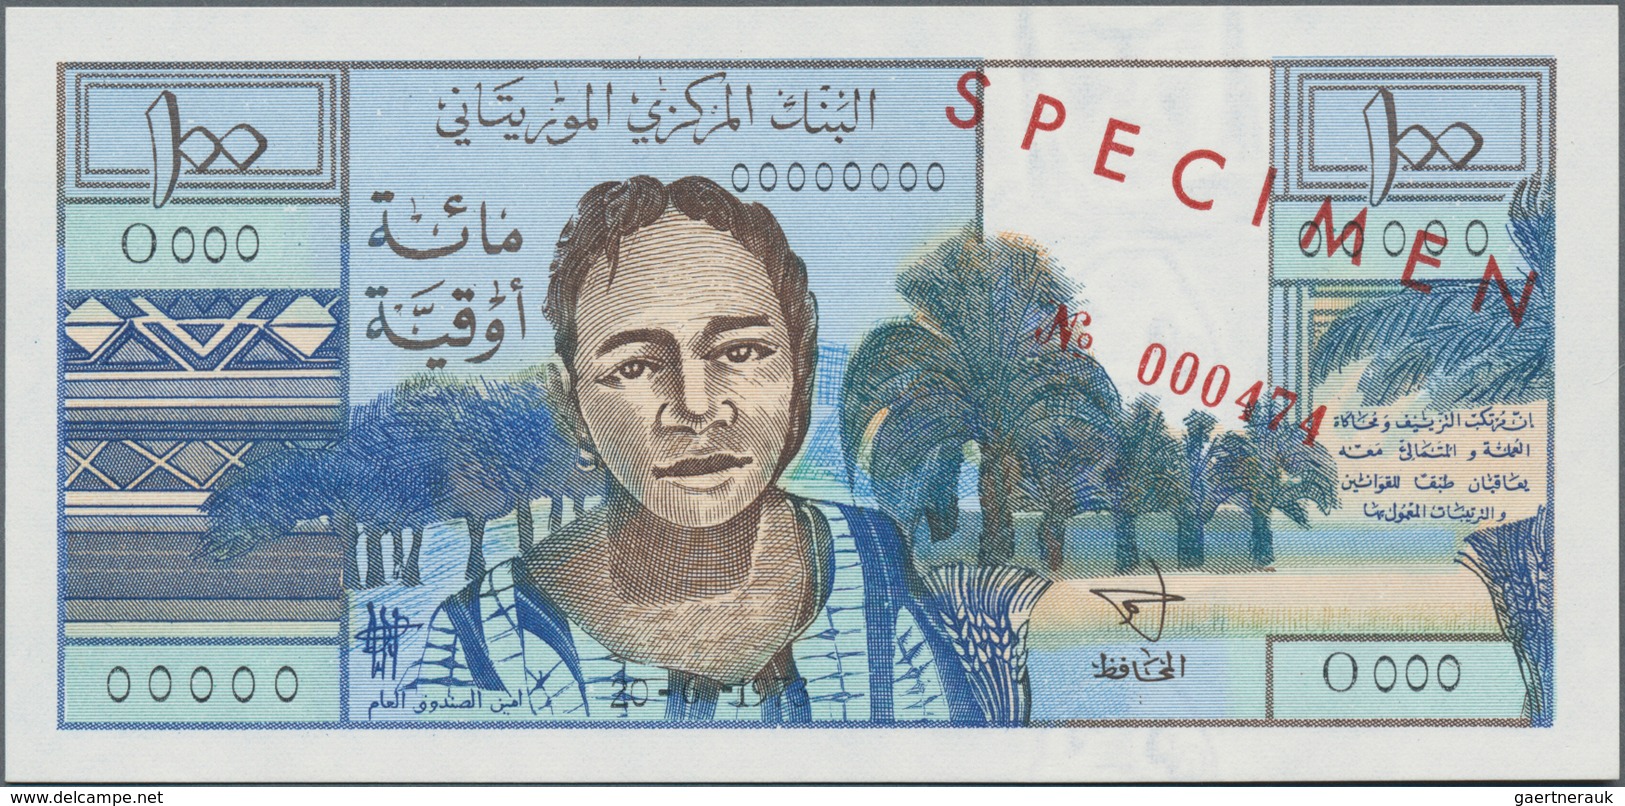 Mauritania / Mauretanien: Banque Centrale De Mauritanie, Rare Set With 100, 200 And 1000 Ouguiya 197 - Mauritania